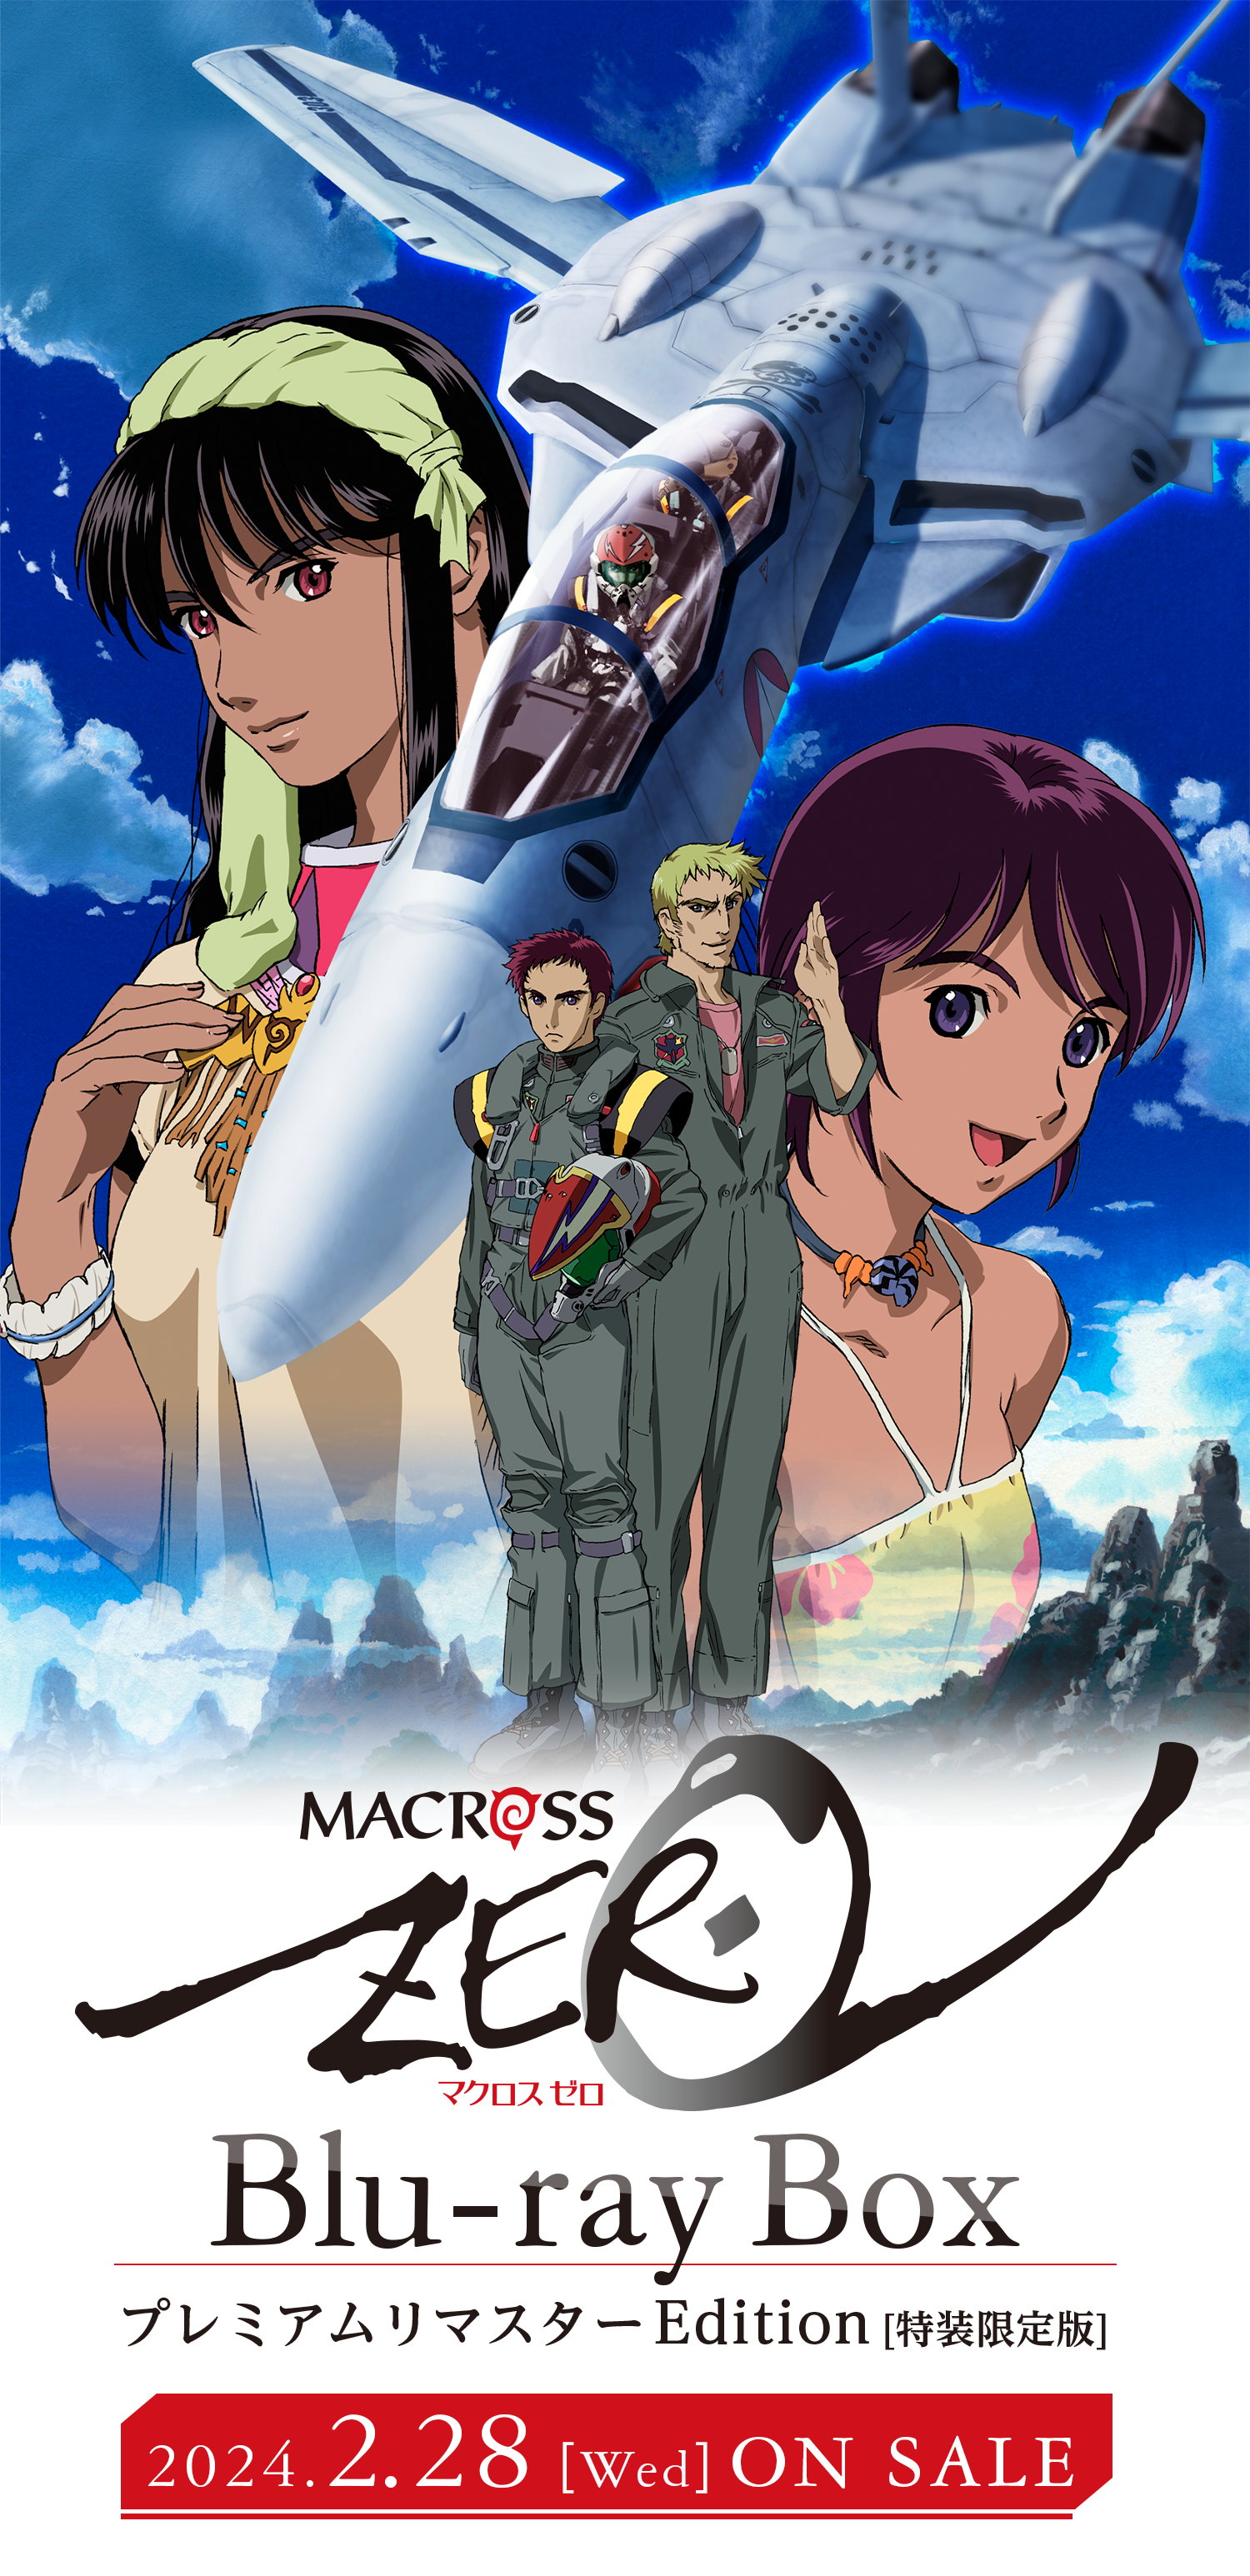 Macross Zero Blu-ray Box Premium Remaster Edition release on 2/28 